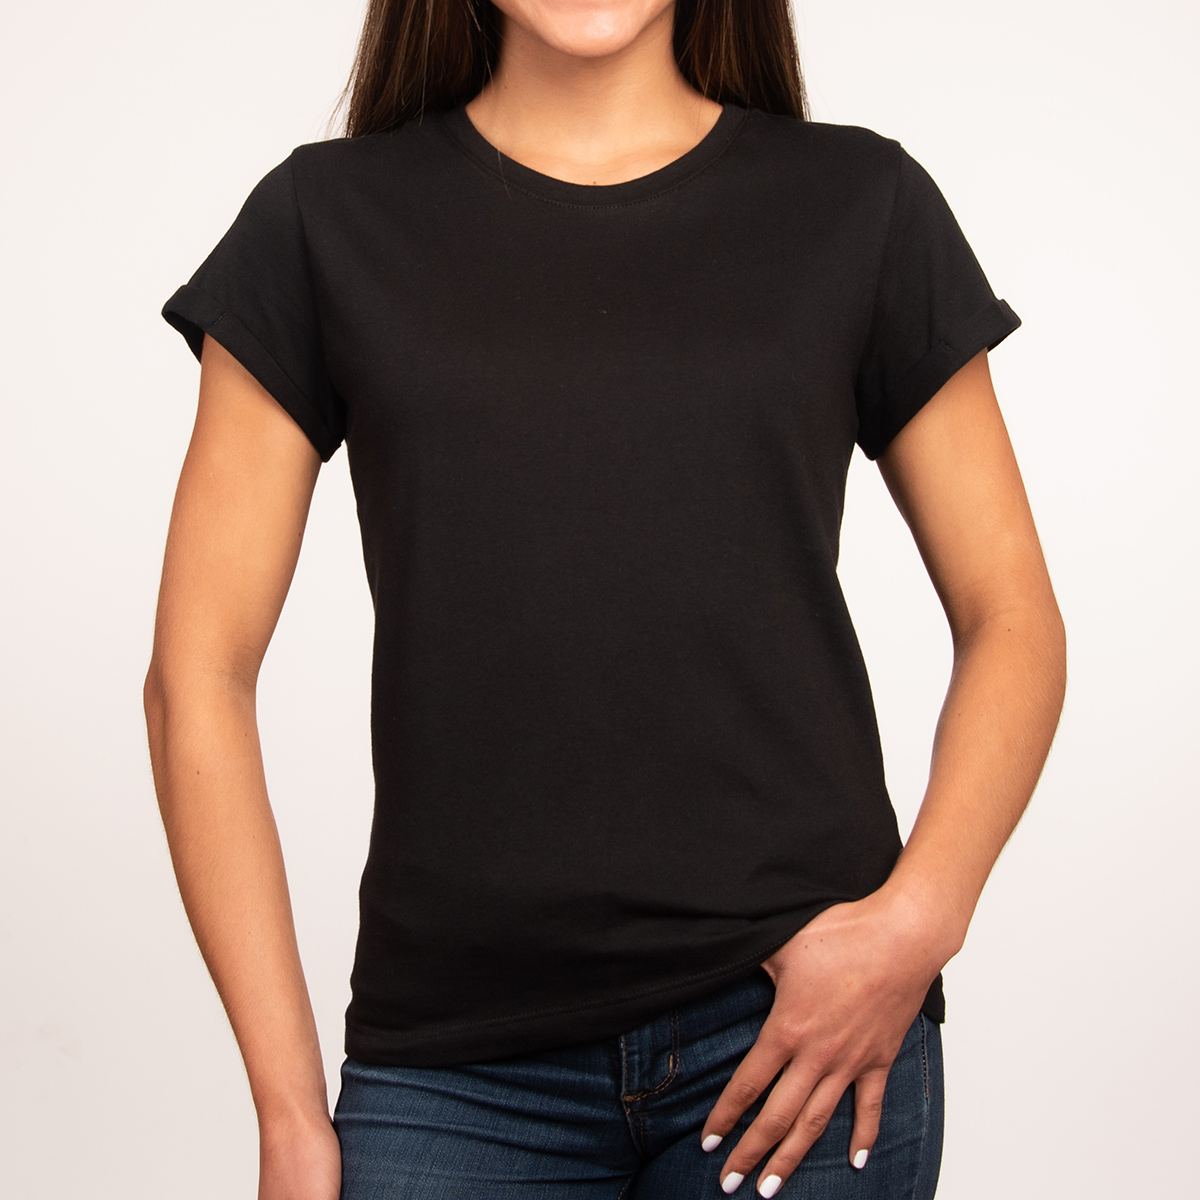 https://dondurazno.com/images/Camiseta-mujer-estampada-negra.jpg